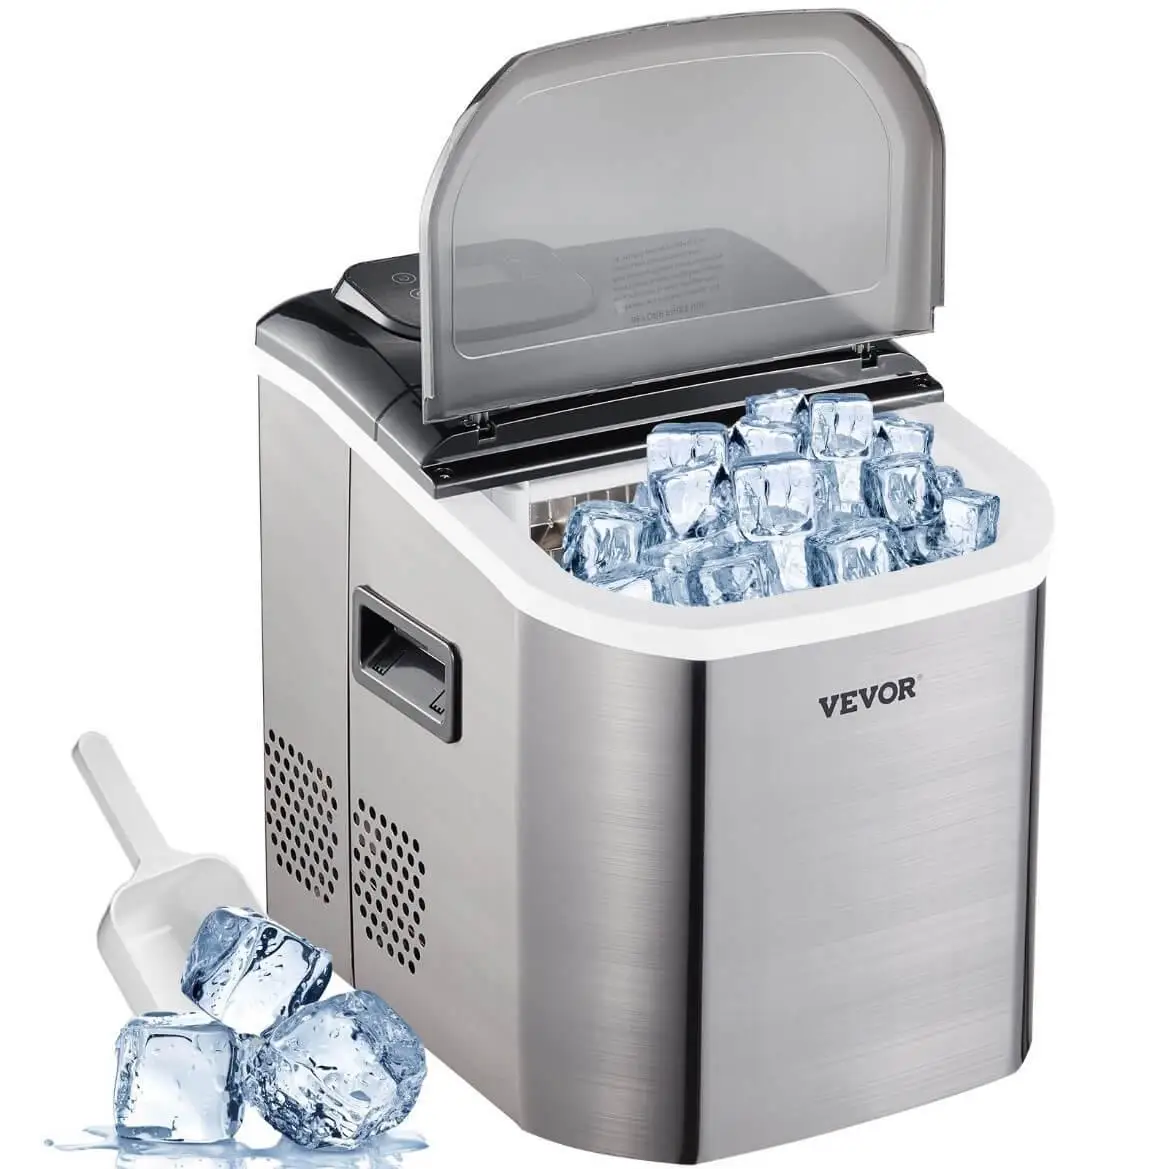 VEVOR 40lbs countertop ice maker